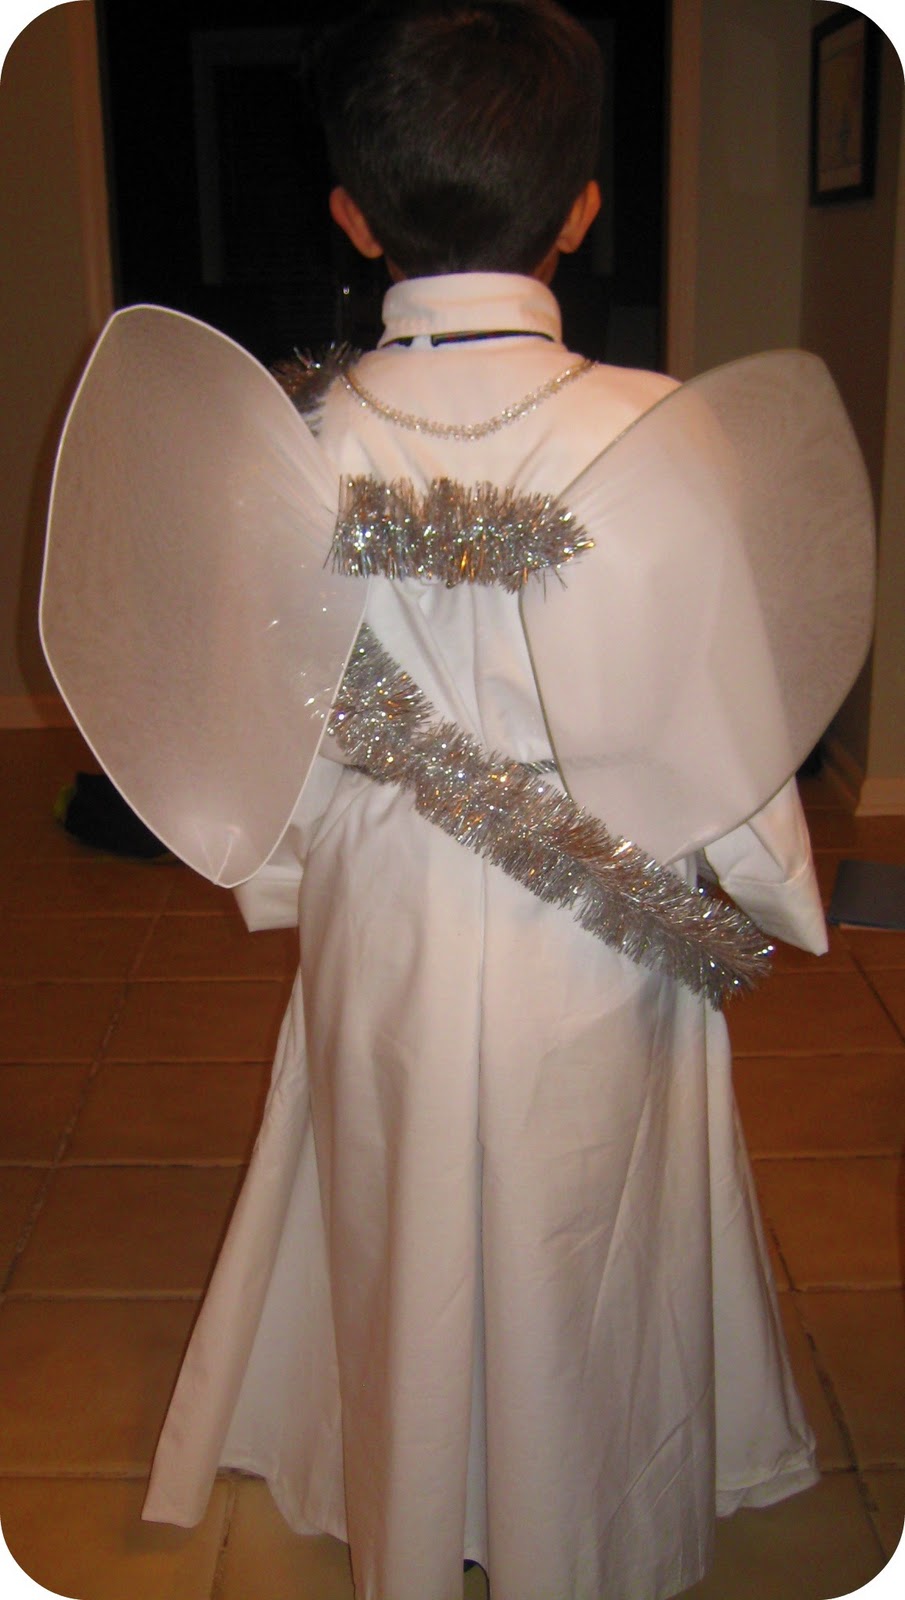 Wingledings: Fastest Angel Costume Ever